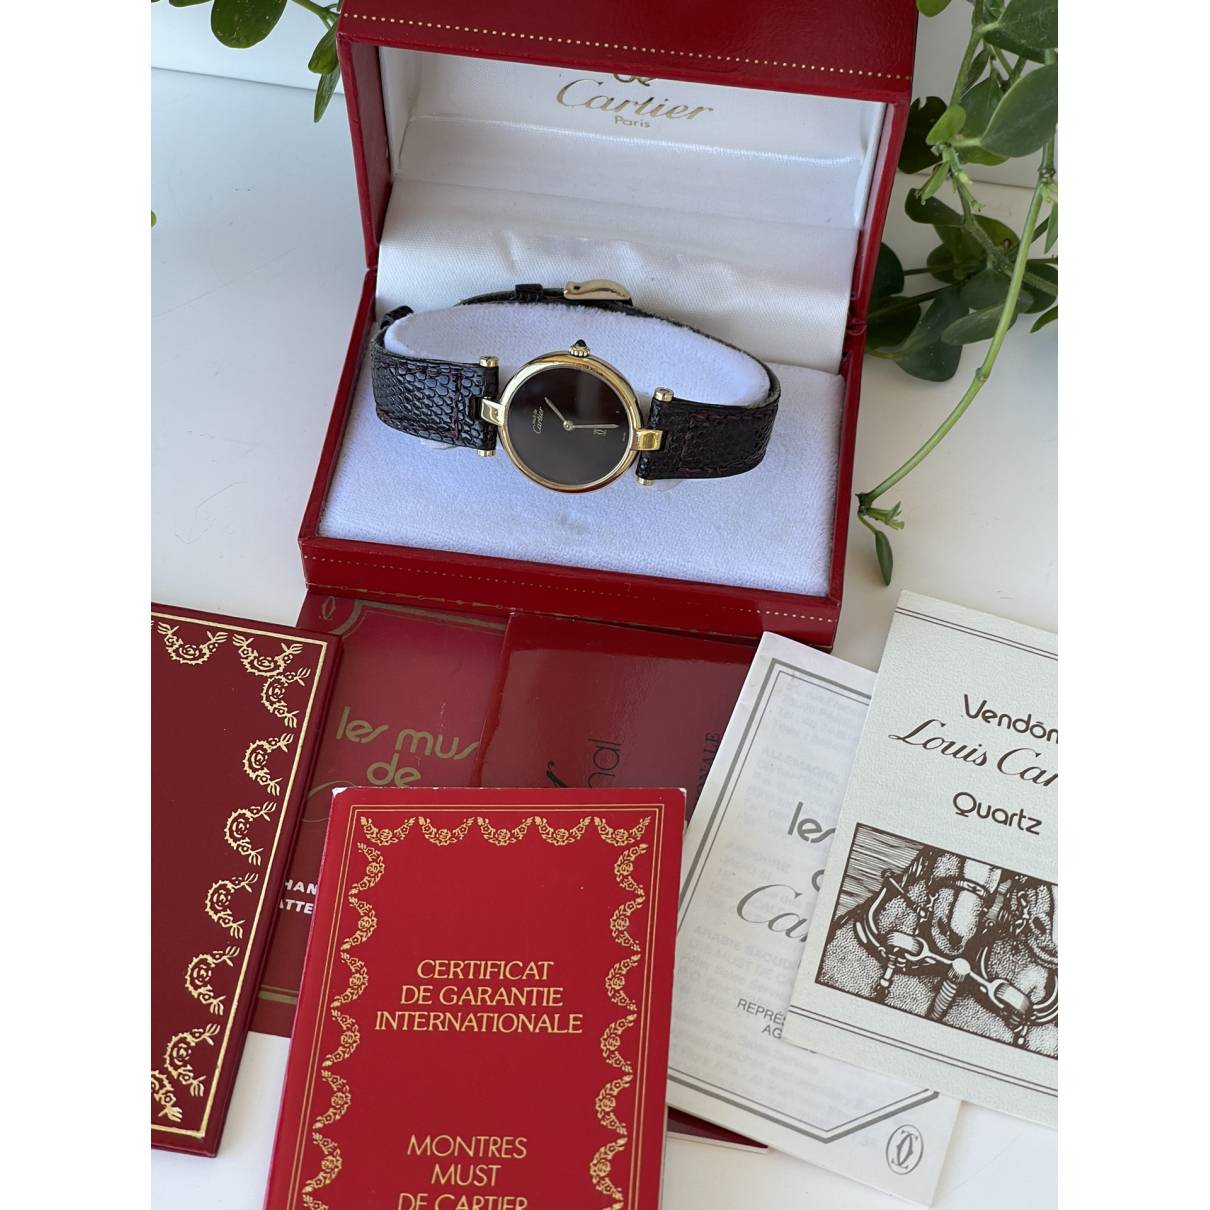 Buy Cartier Must Vendôme watch online